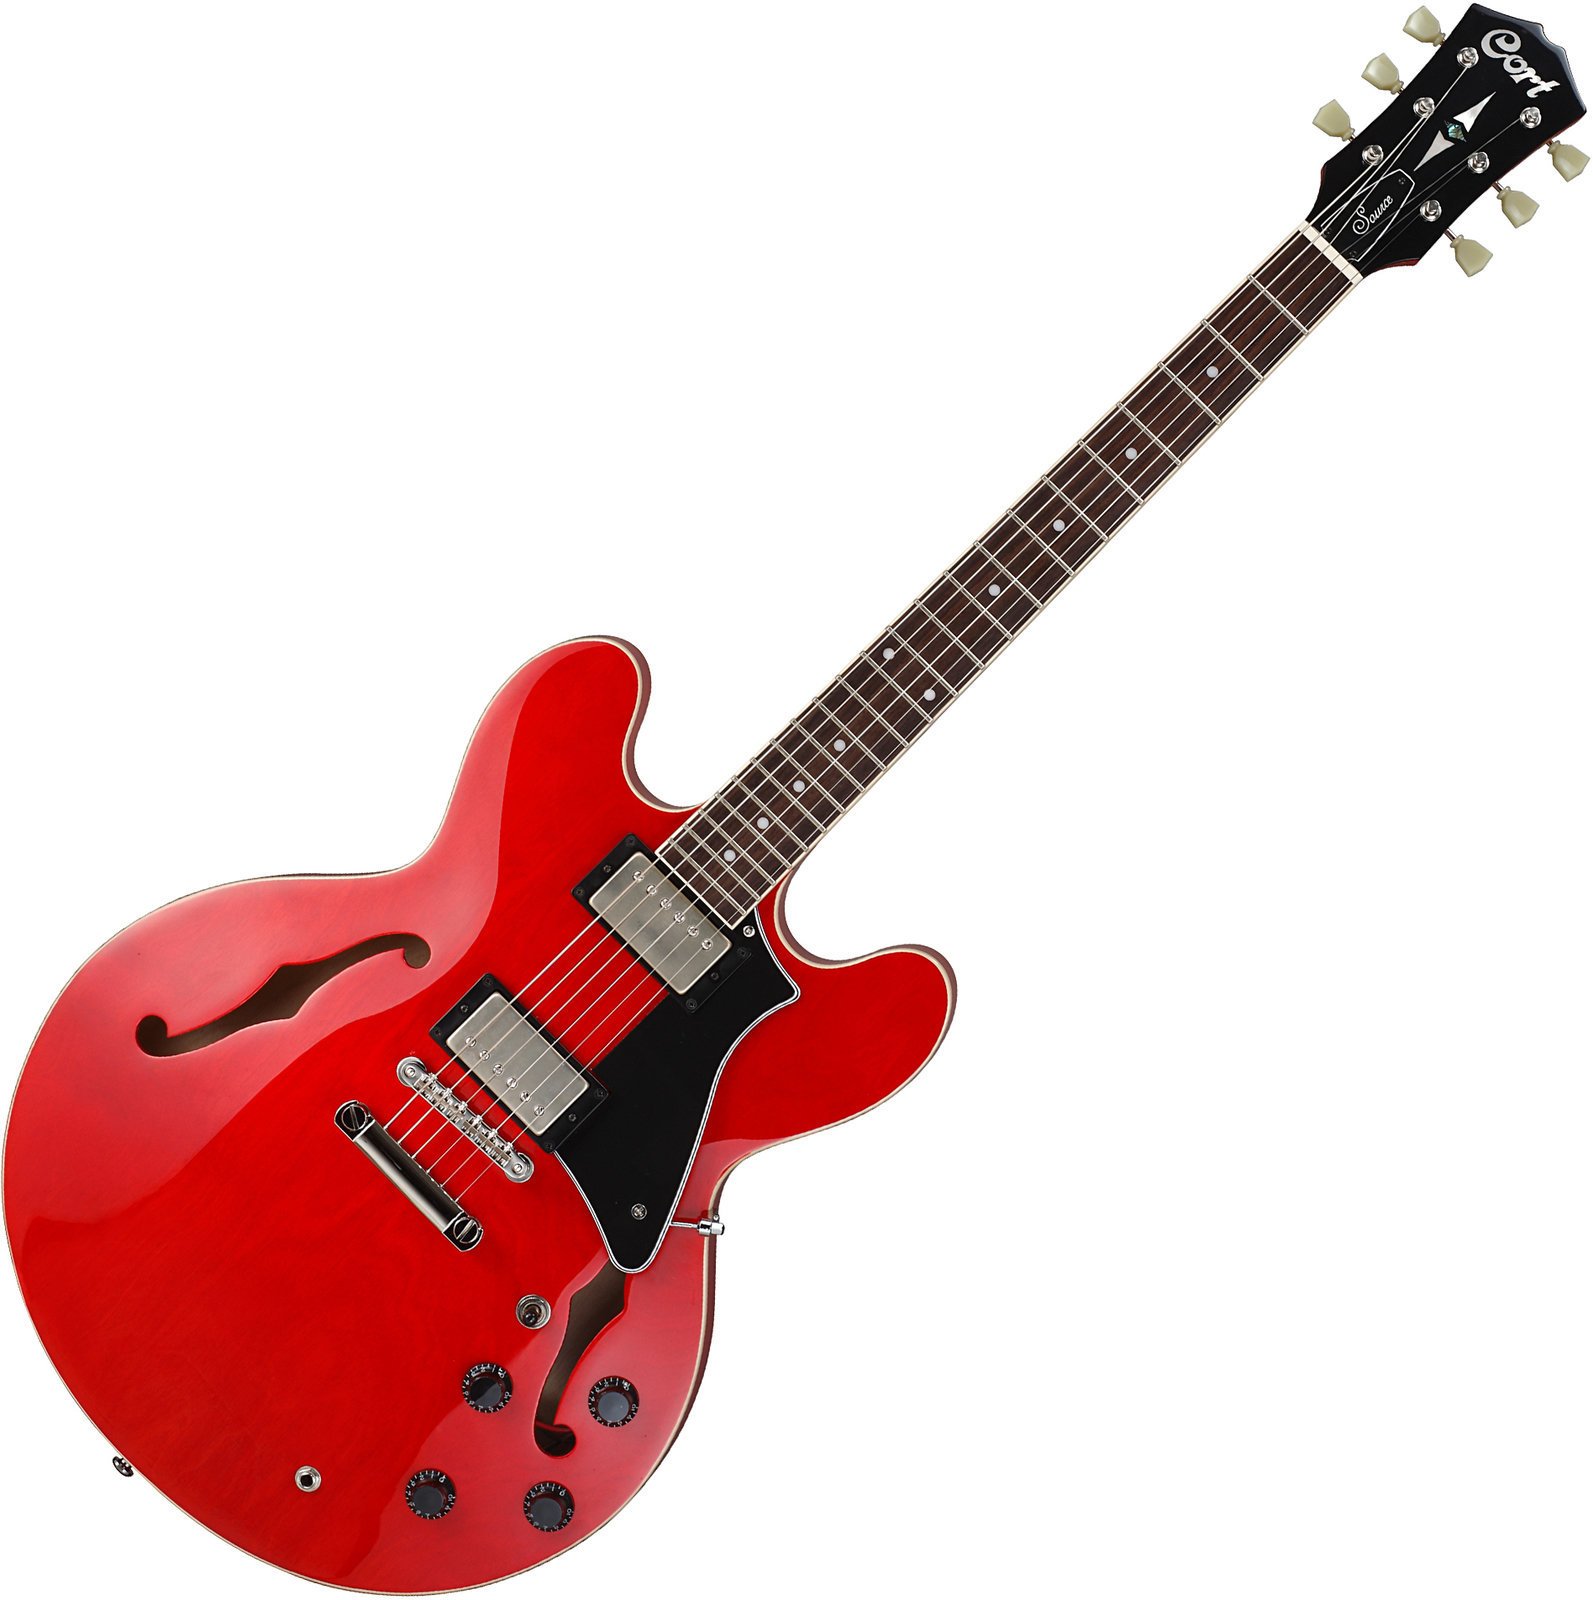 Semiakustická gitara Cort Source Cherry Red